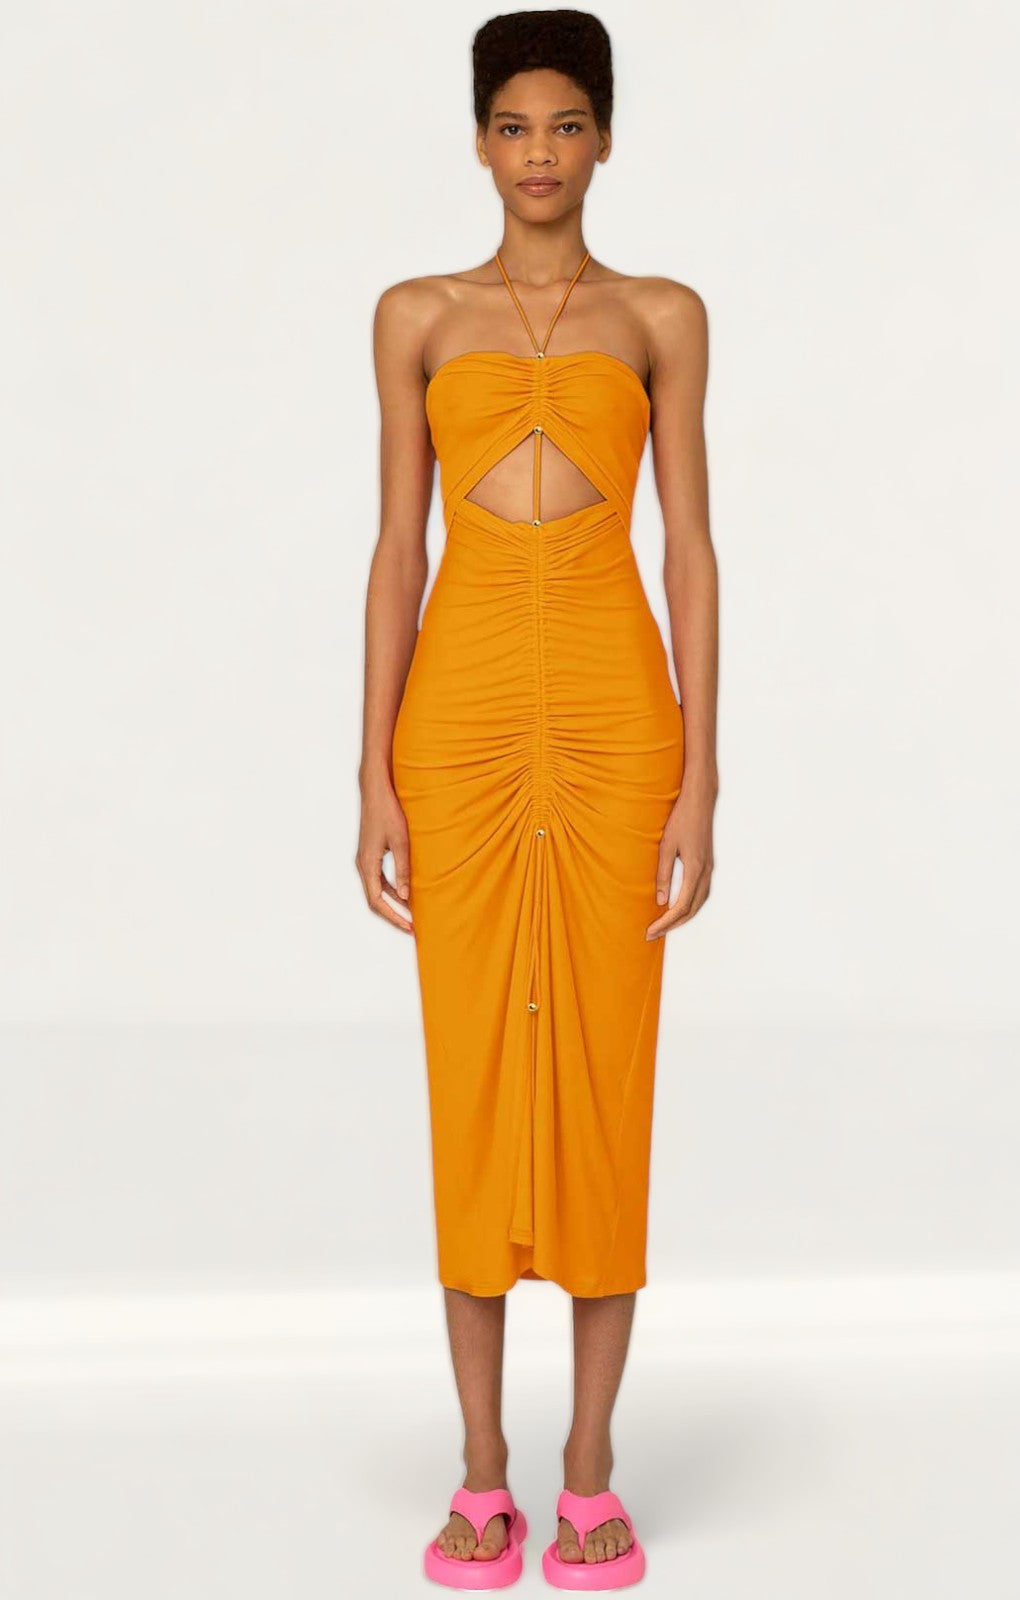 Amy Lynn Warm Orange Vega Jersey Cut-Out Dress product image